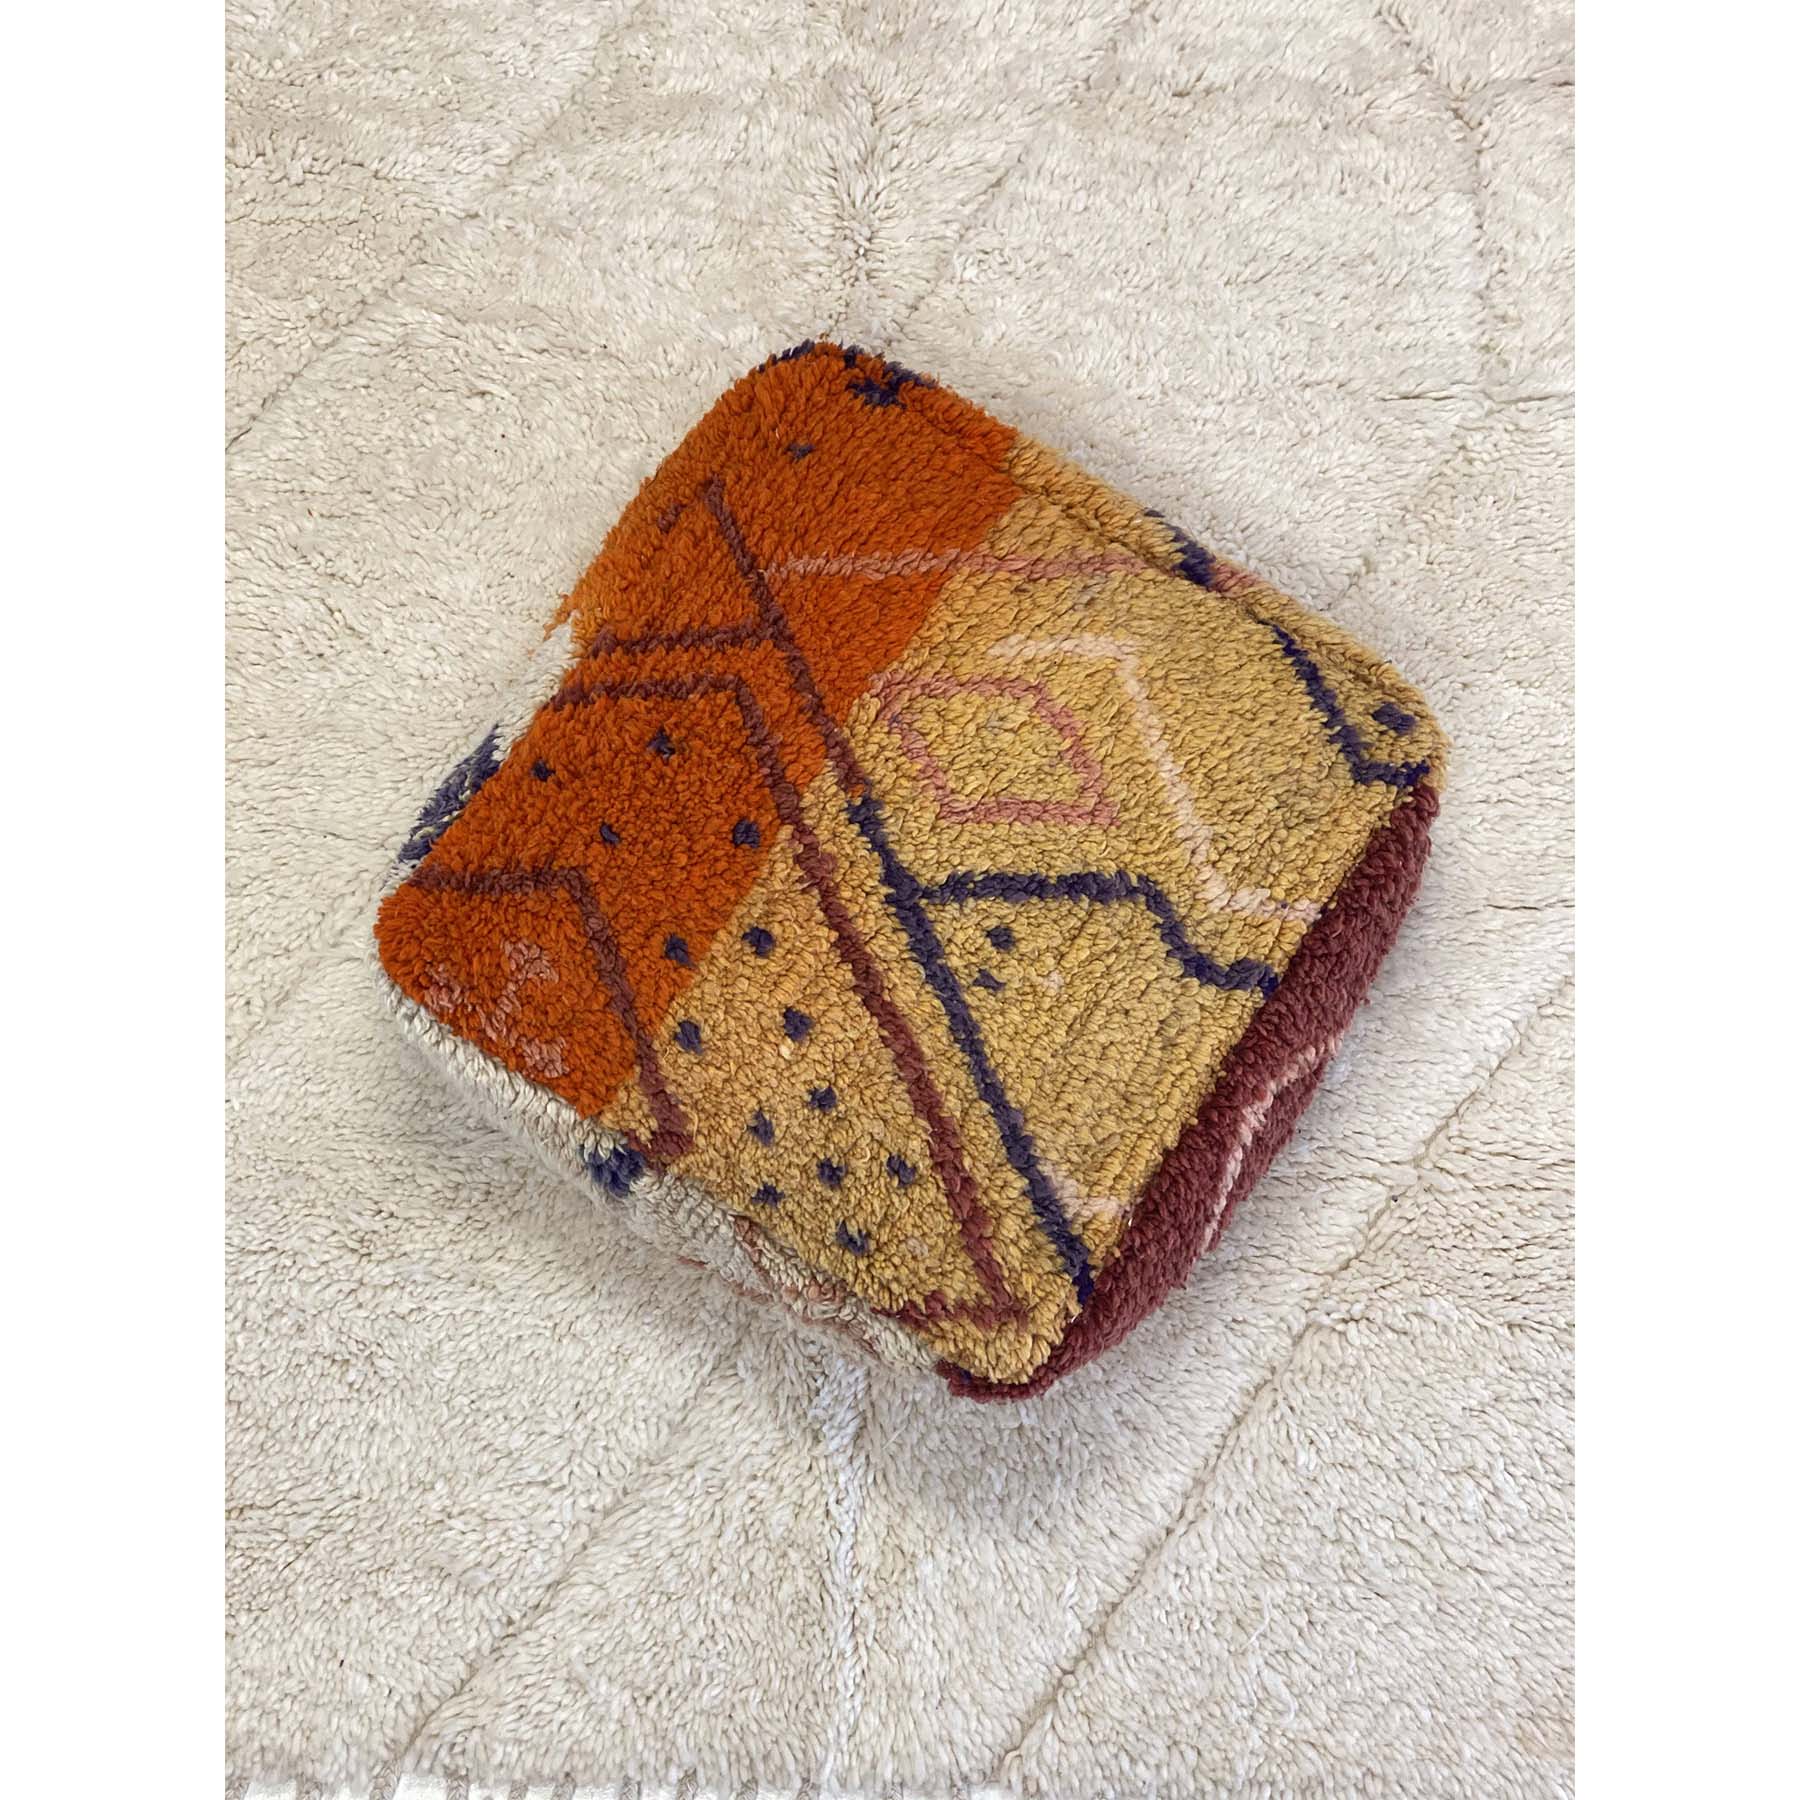 Yellow and orange Moroccan floor pouf with geometric pattern design - Kantara | Moroccan Rugs